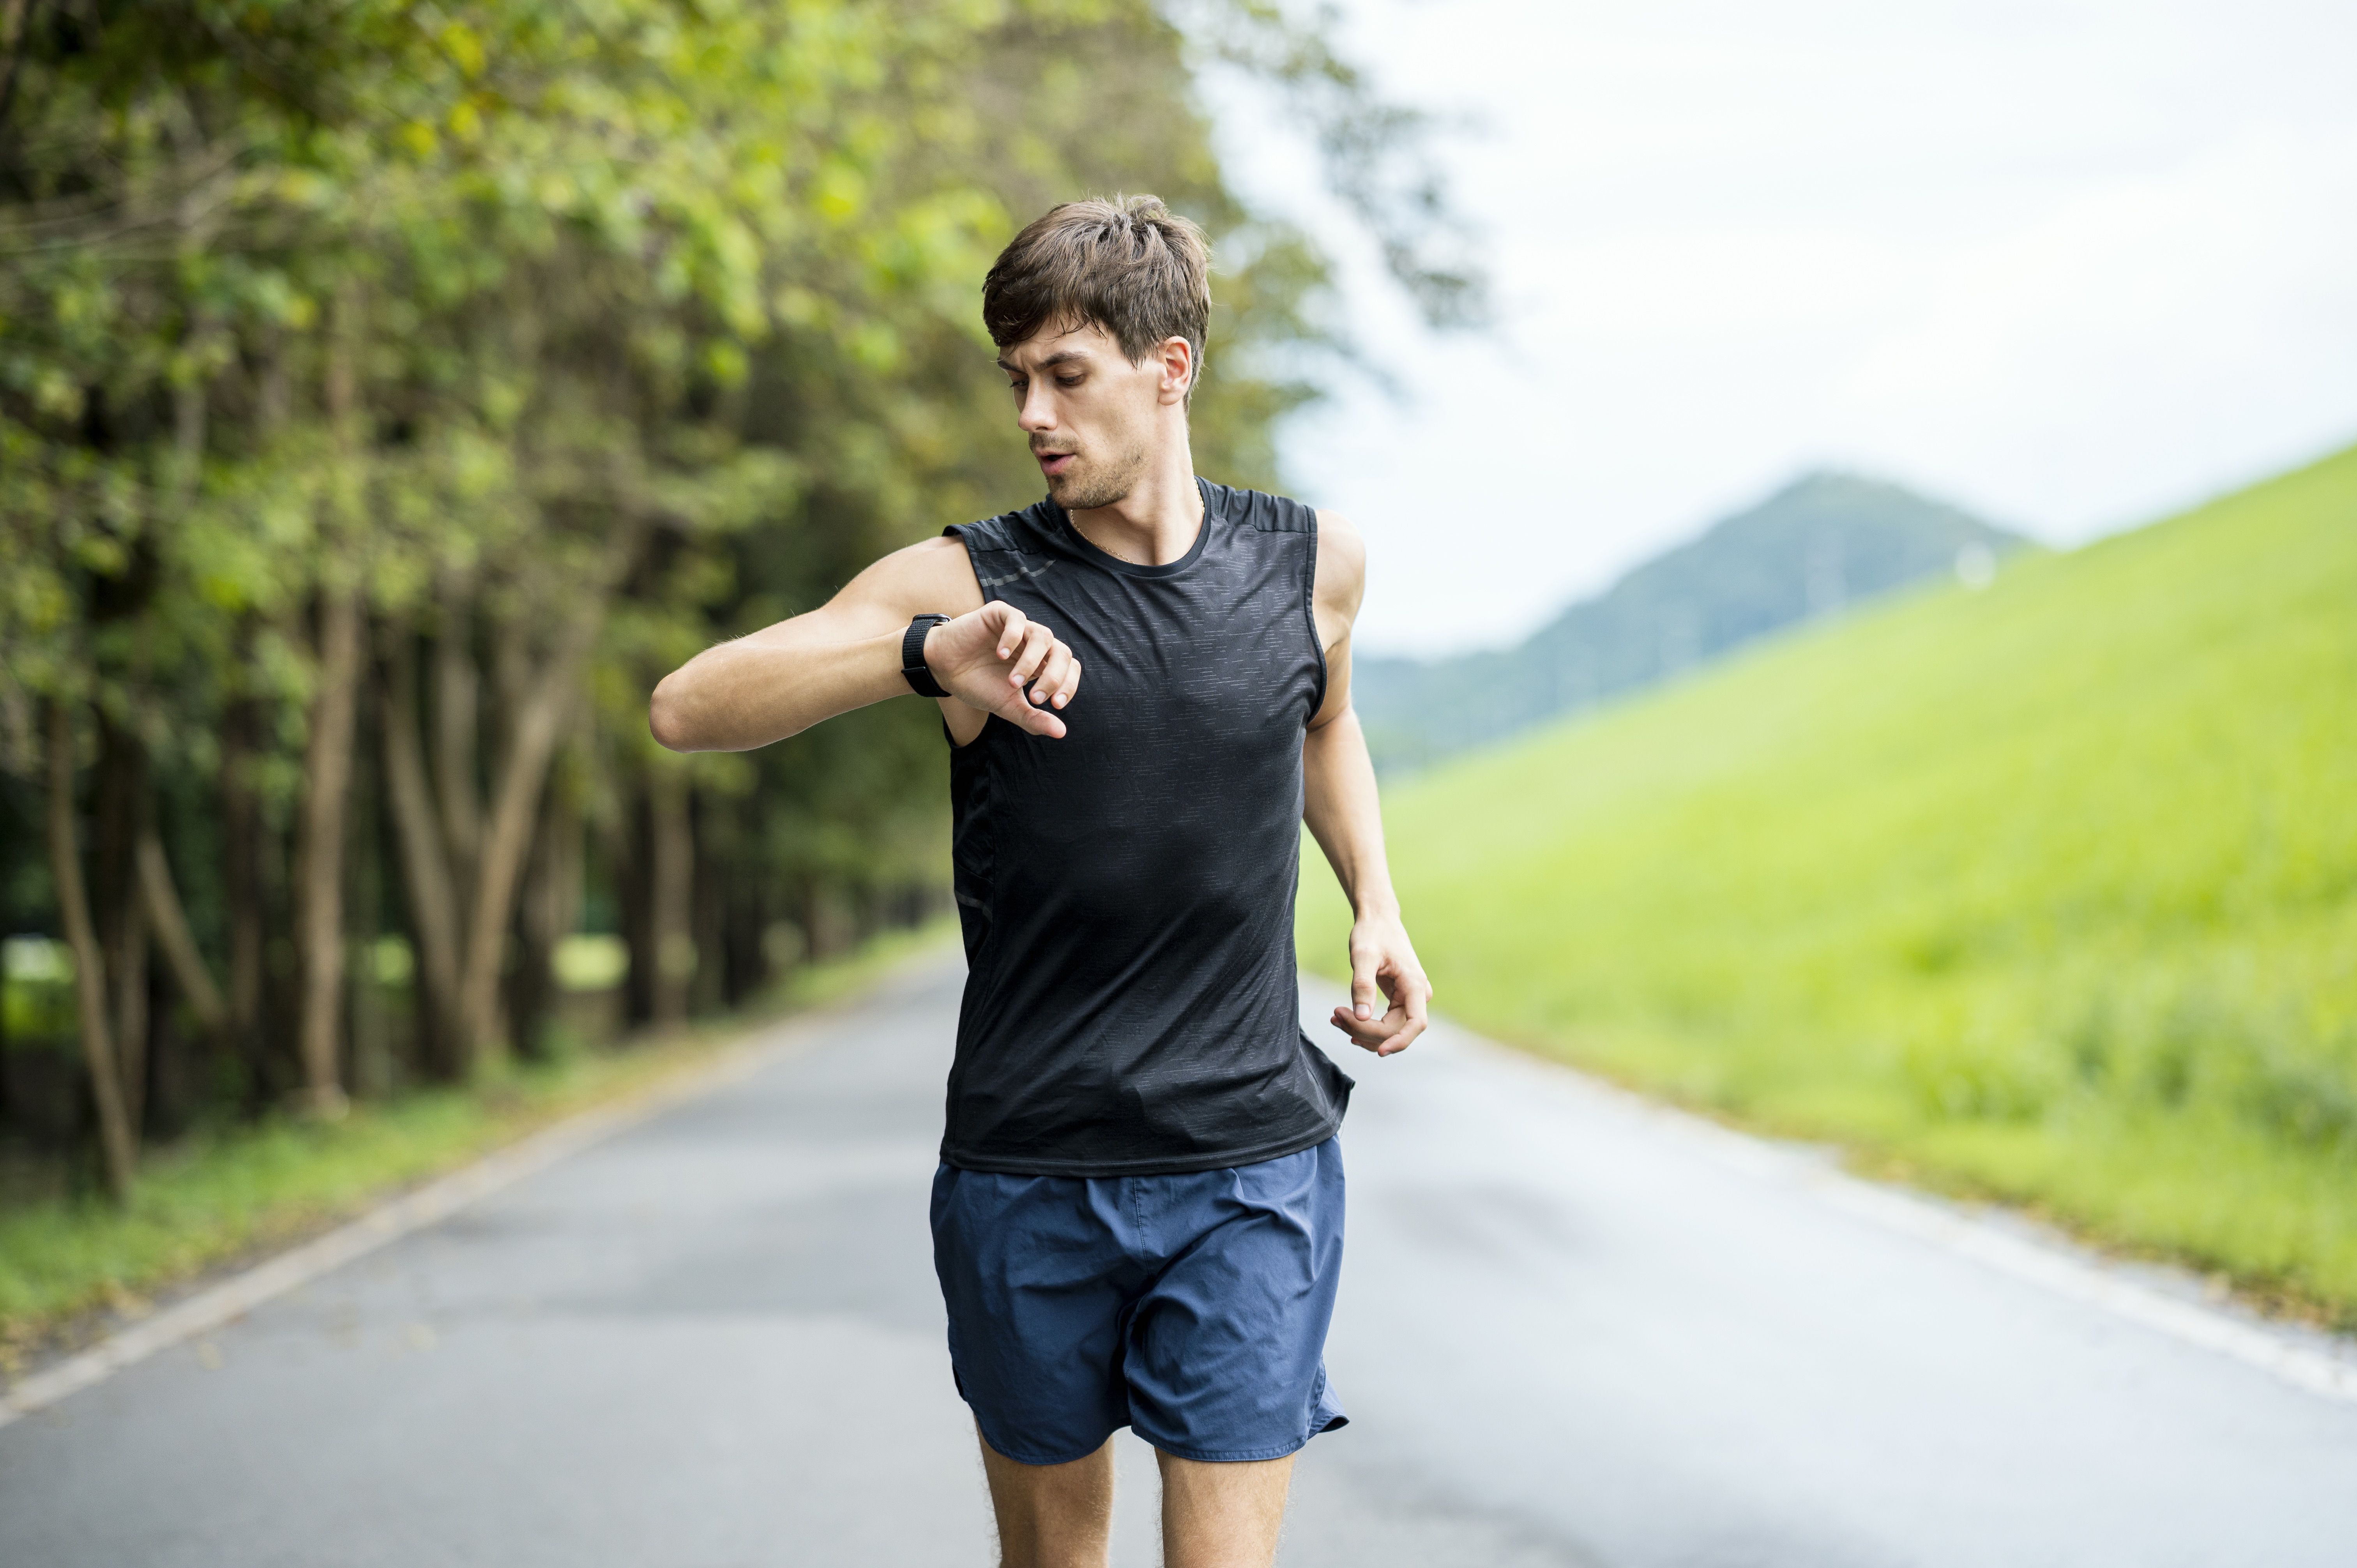 Bas de jogging - ADIDAS - Homme - Noir - Fitness - Running